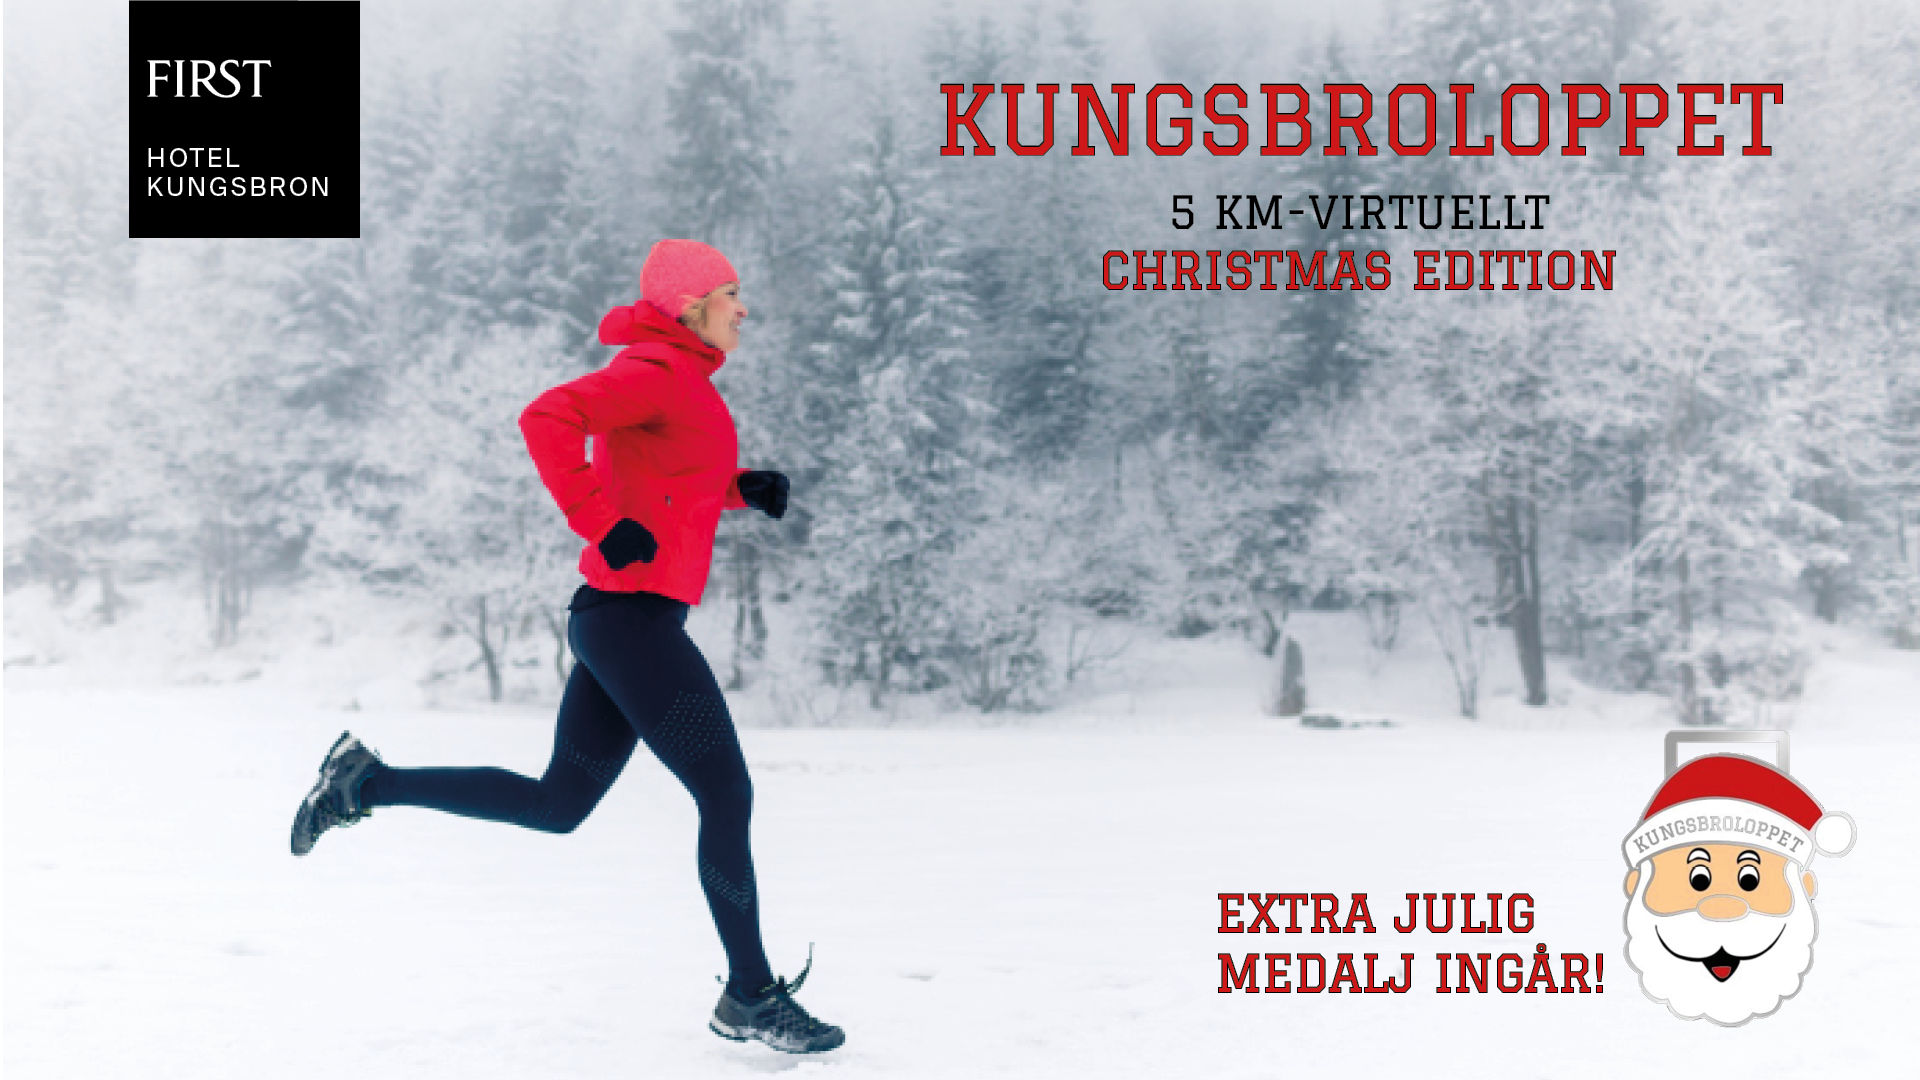 Kungsbroloppet - December Christmas Edition 5 KM